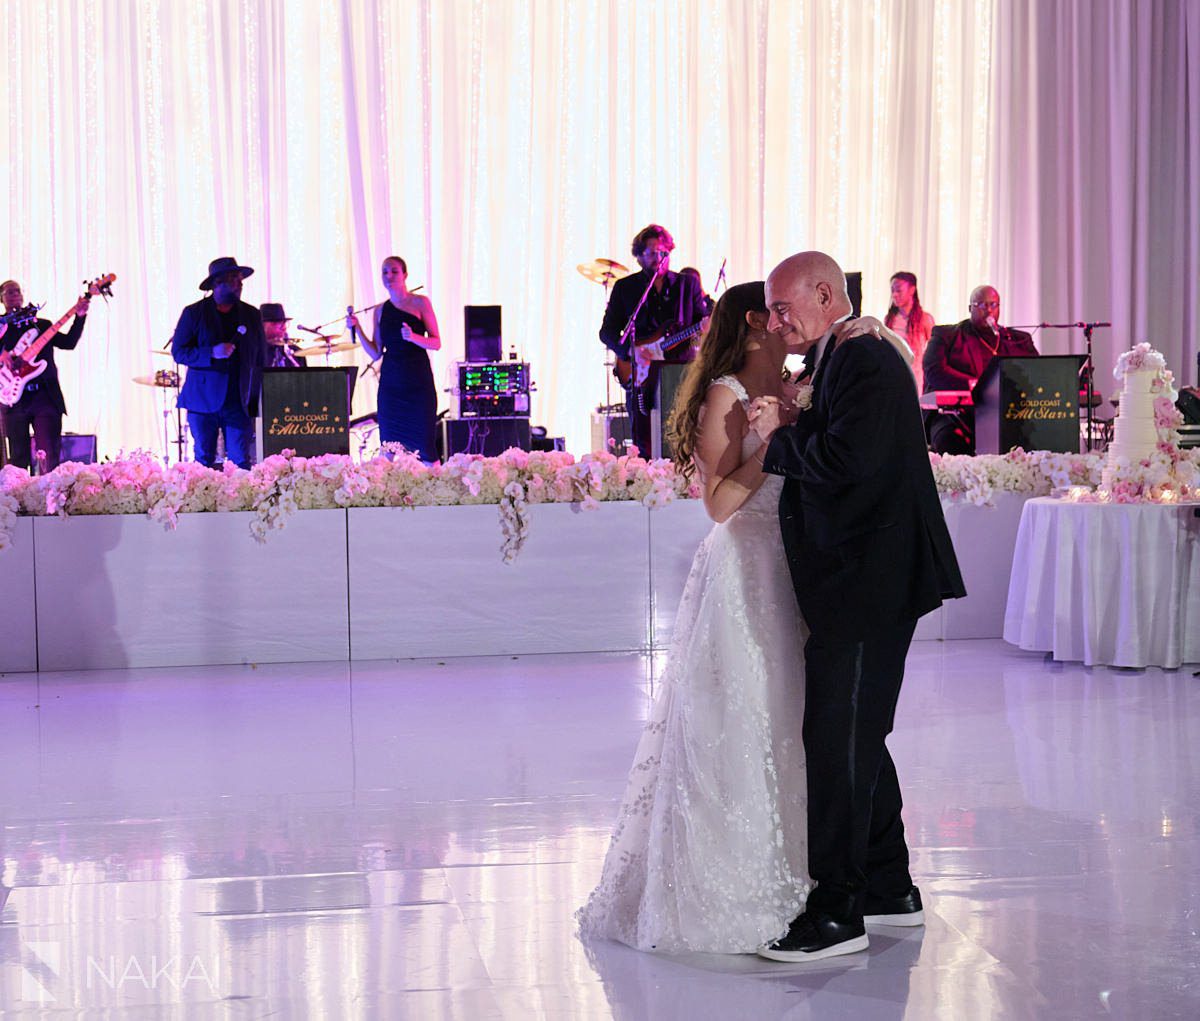 Loews chicago hotel wedding photos reception father daughter dance